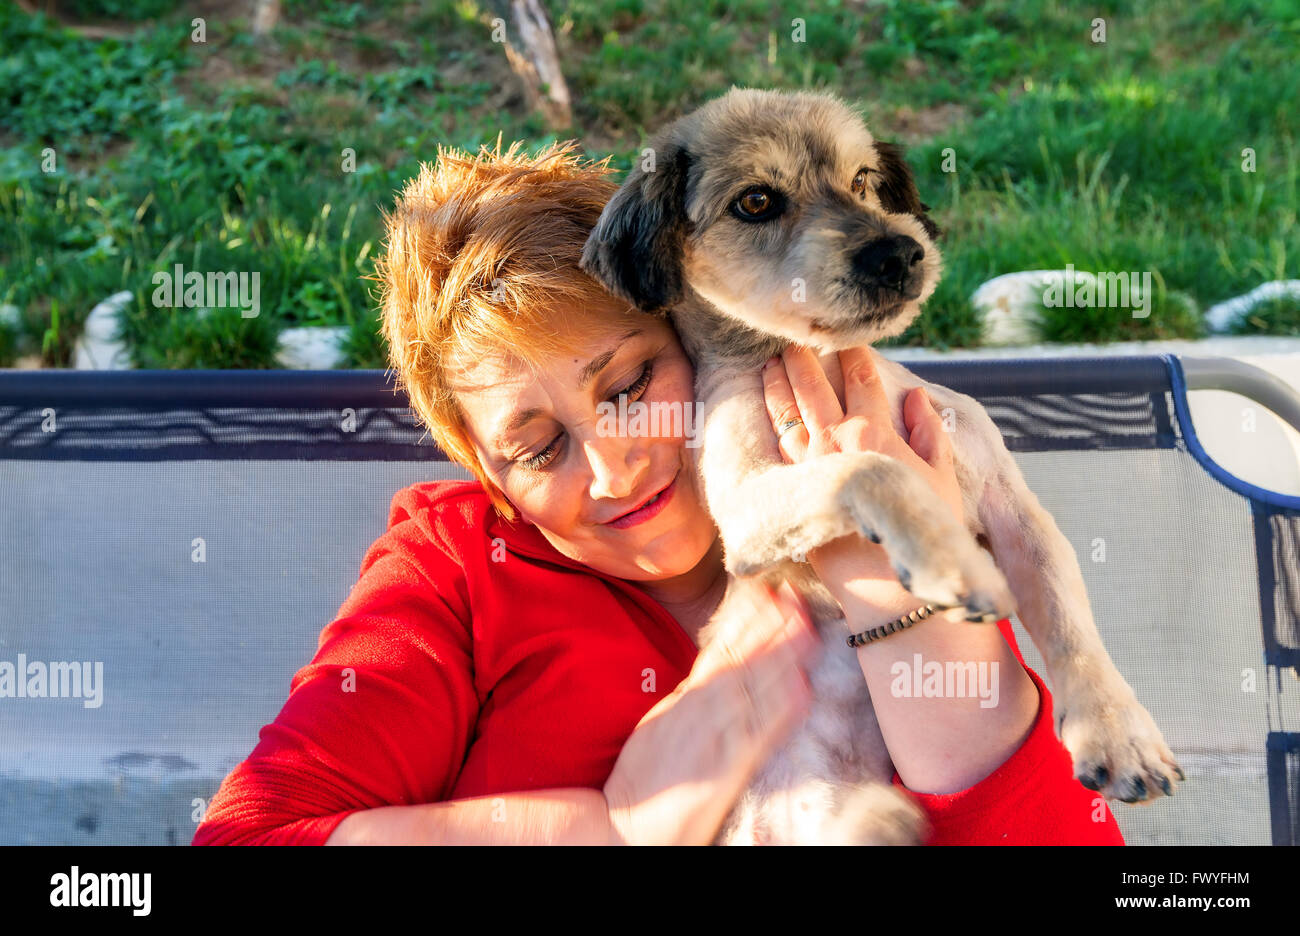 Hunedoara, Romania - 01 July 2014: Happy Blonde Woman Clutching At Chest Newly Adopted Dog In Hunedoara On July 01, 2014 Stock Photo